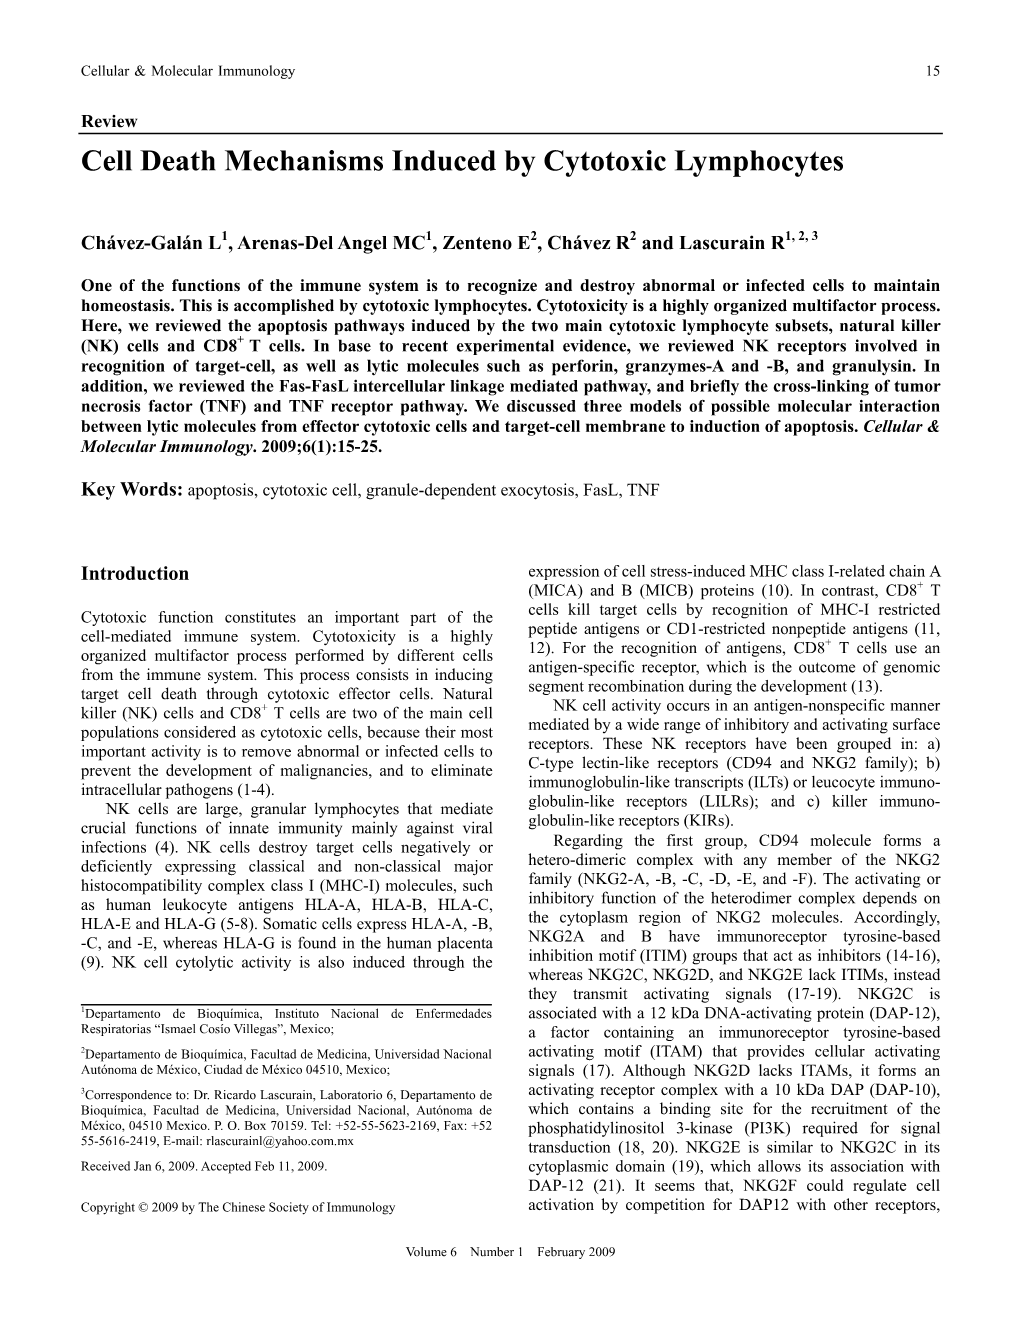 Cell Death Mechanisms Induced by Cytotoxic Lymphocytes